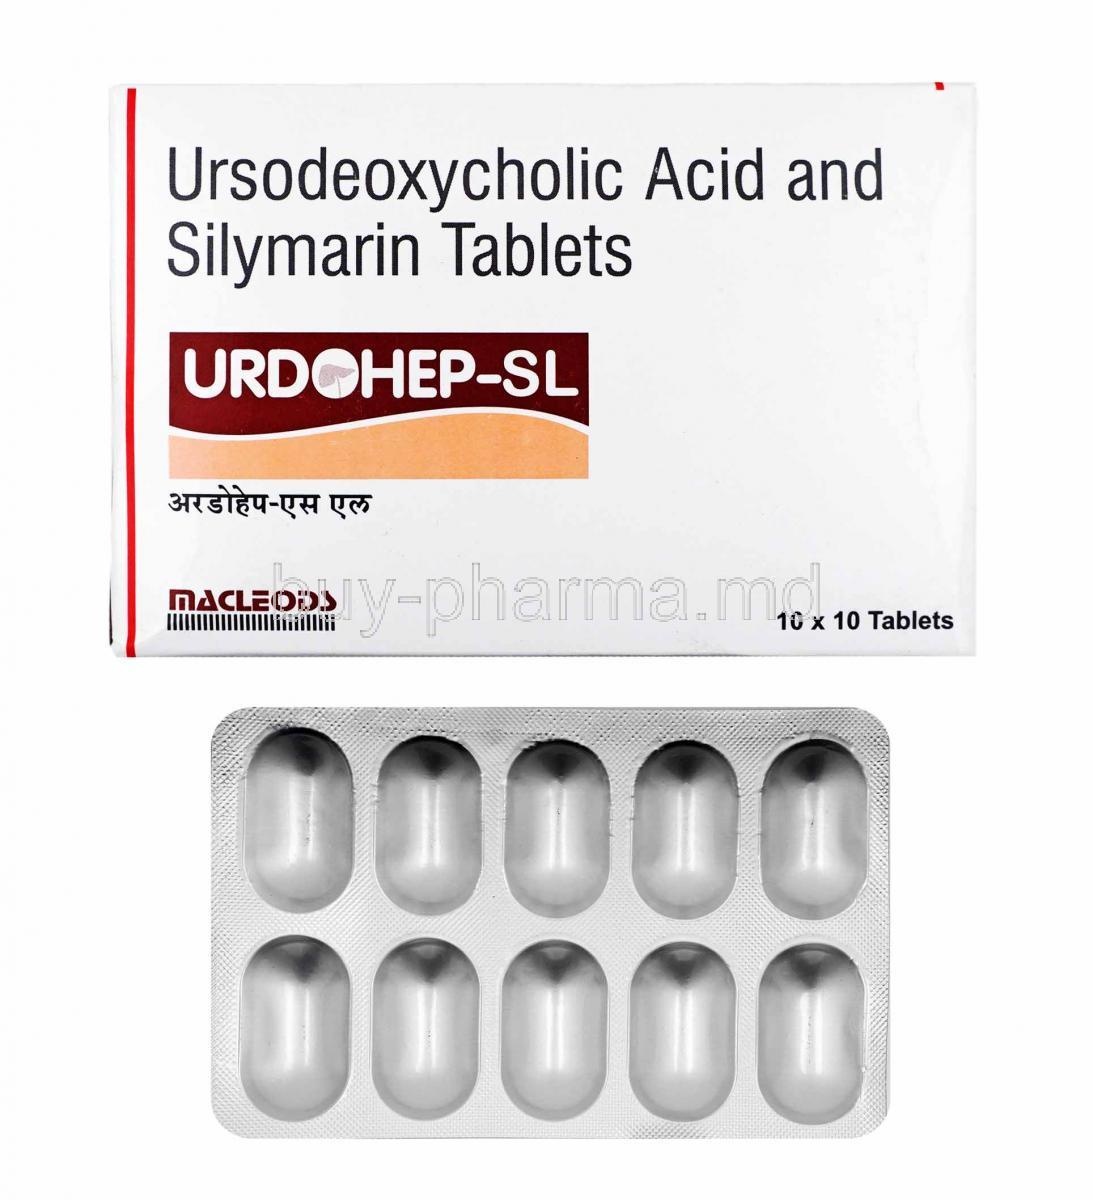 Urdohep SL, Silymarin and Ursodiol box and tablets